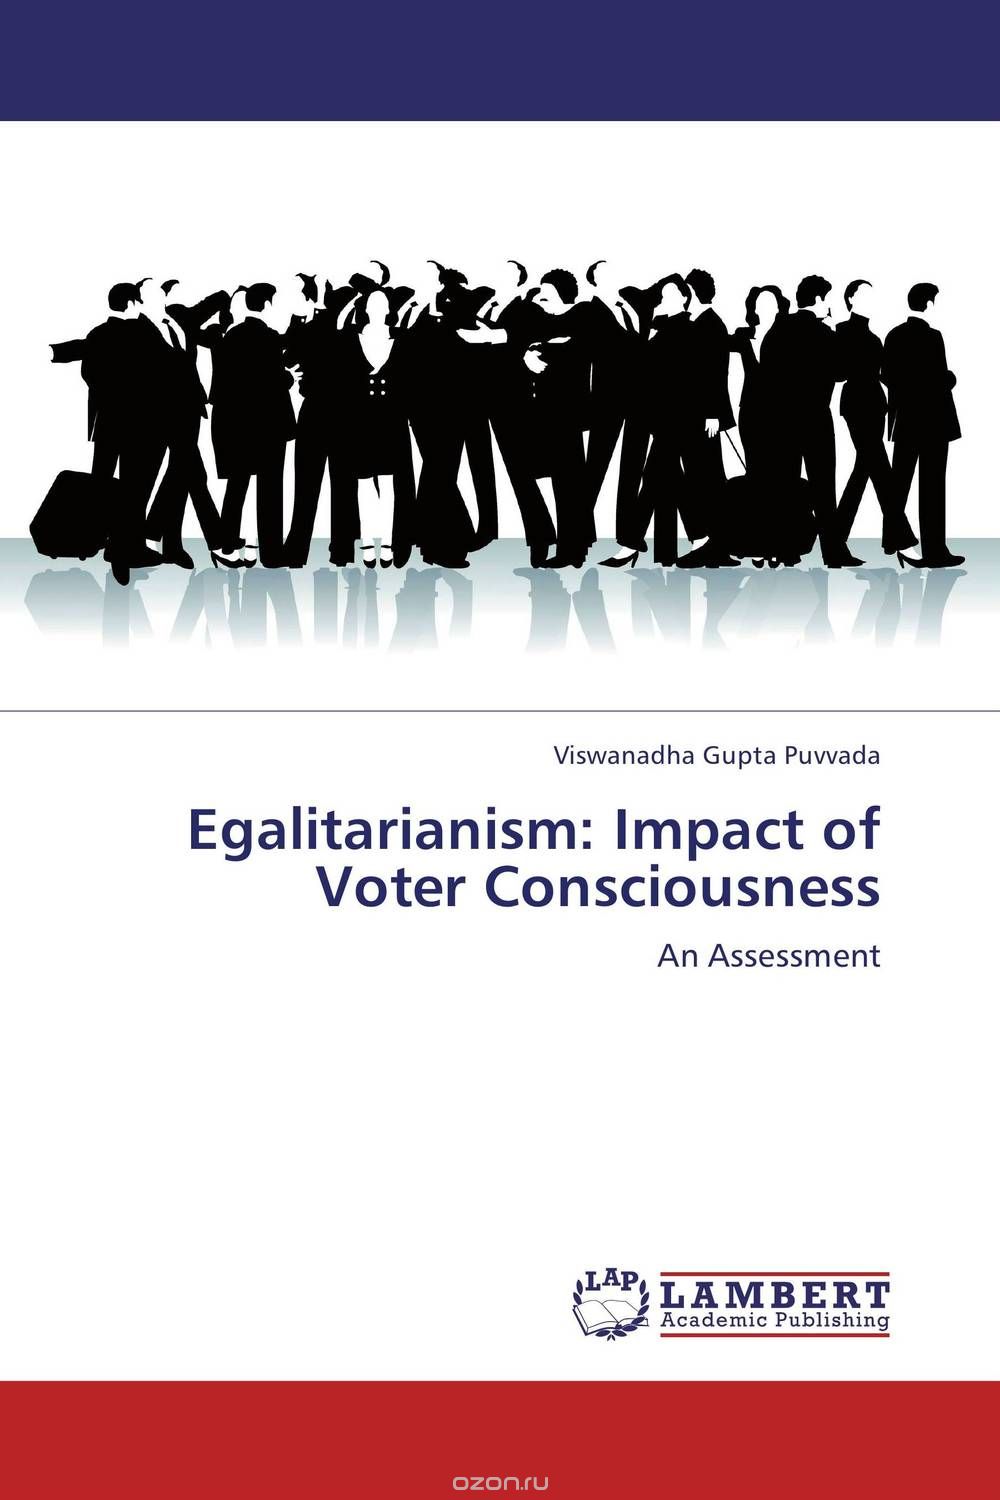 Скачать книгу "Egalitarianism: Impact of Voter Consciousness"